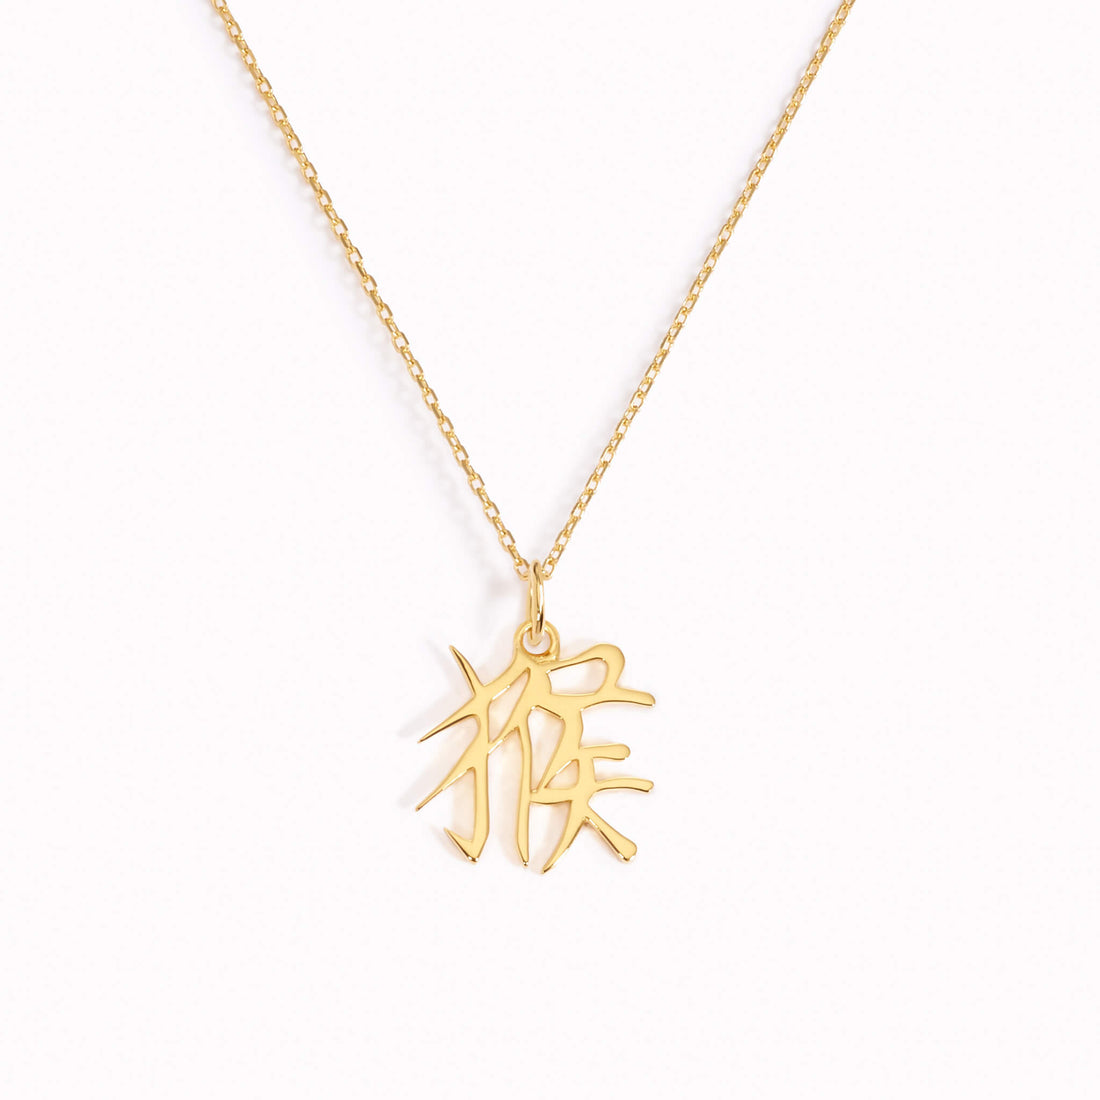 Chinese Zodiac Necklace - Monkey